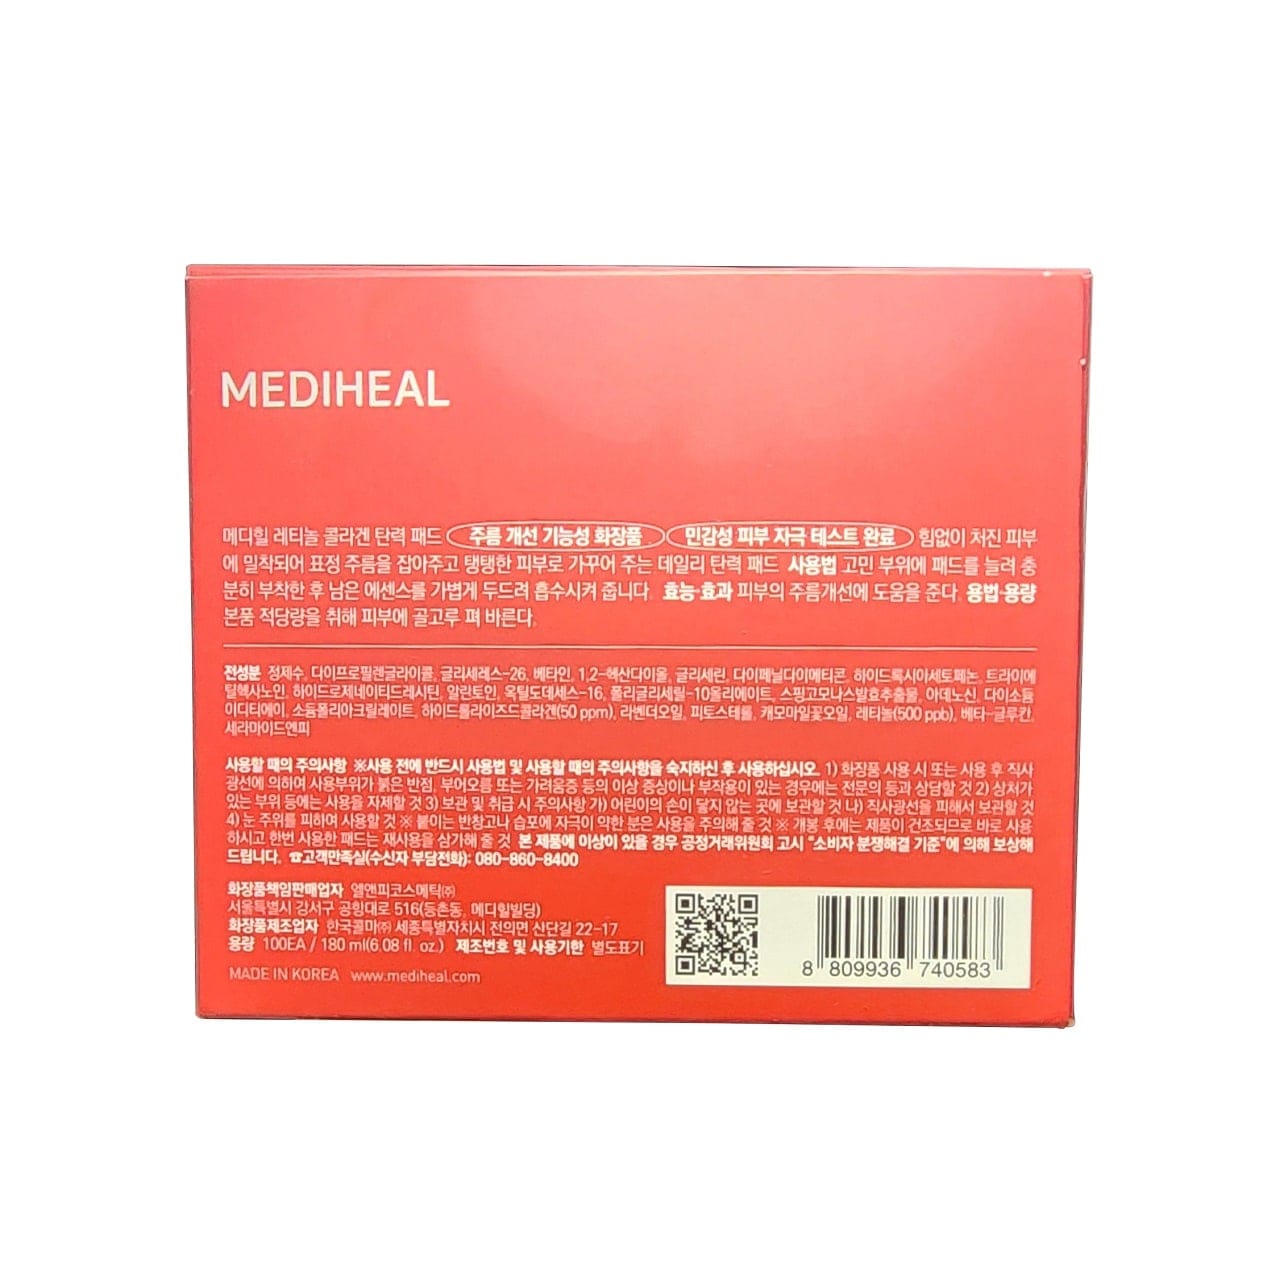 Description, ingredients, cautions for Mediheal Retinol Collagen Lifting Pads (100 count) in Korean